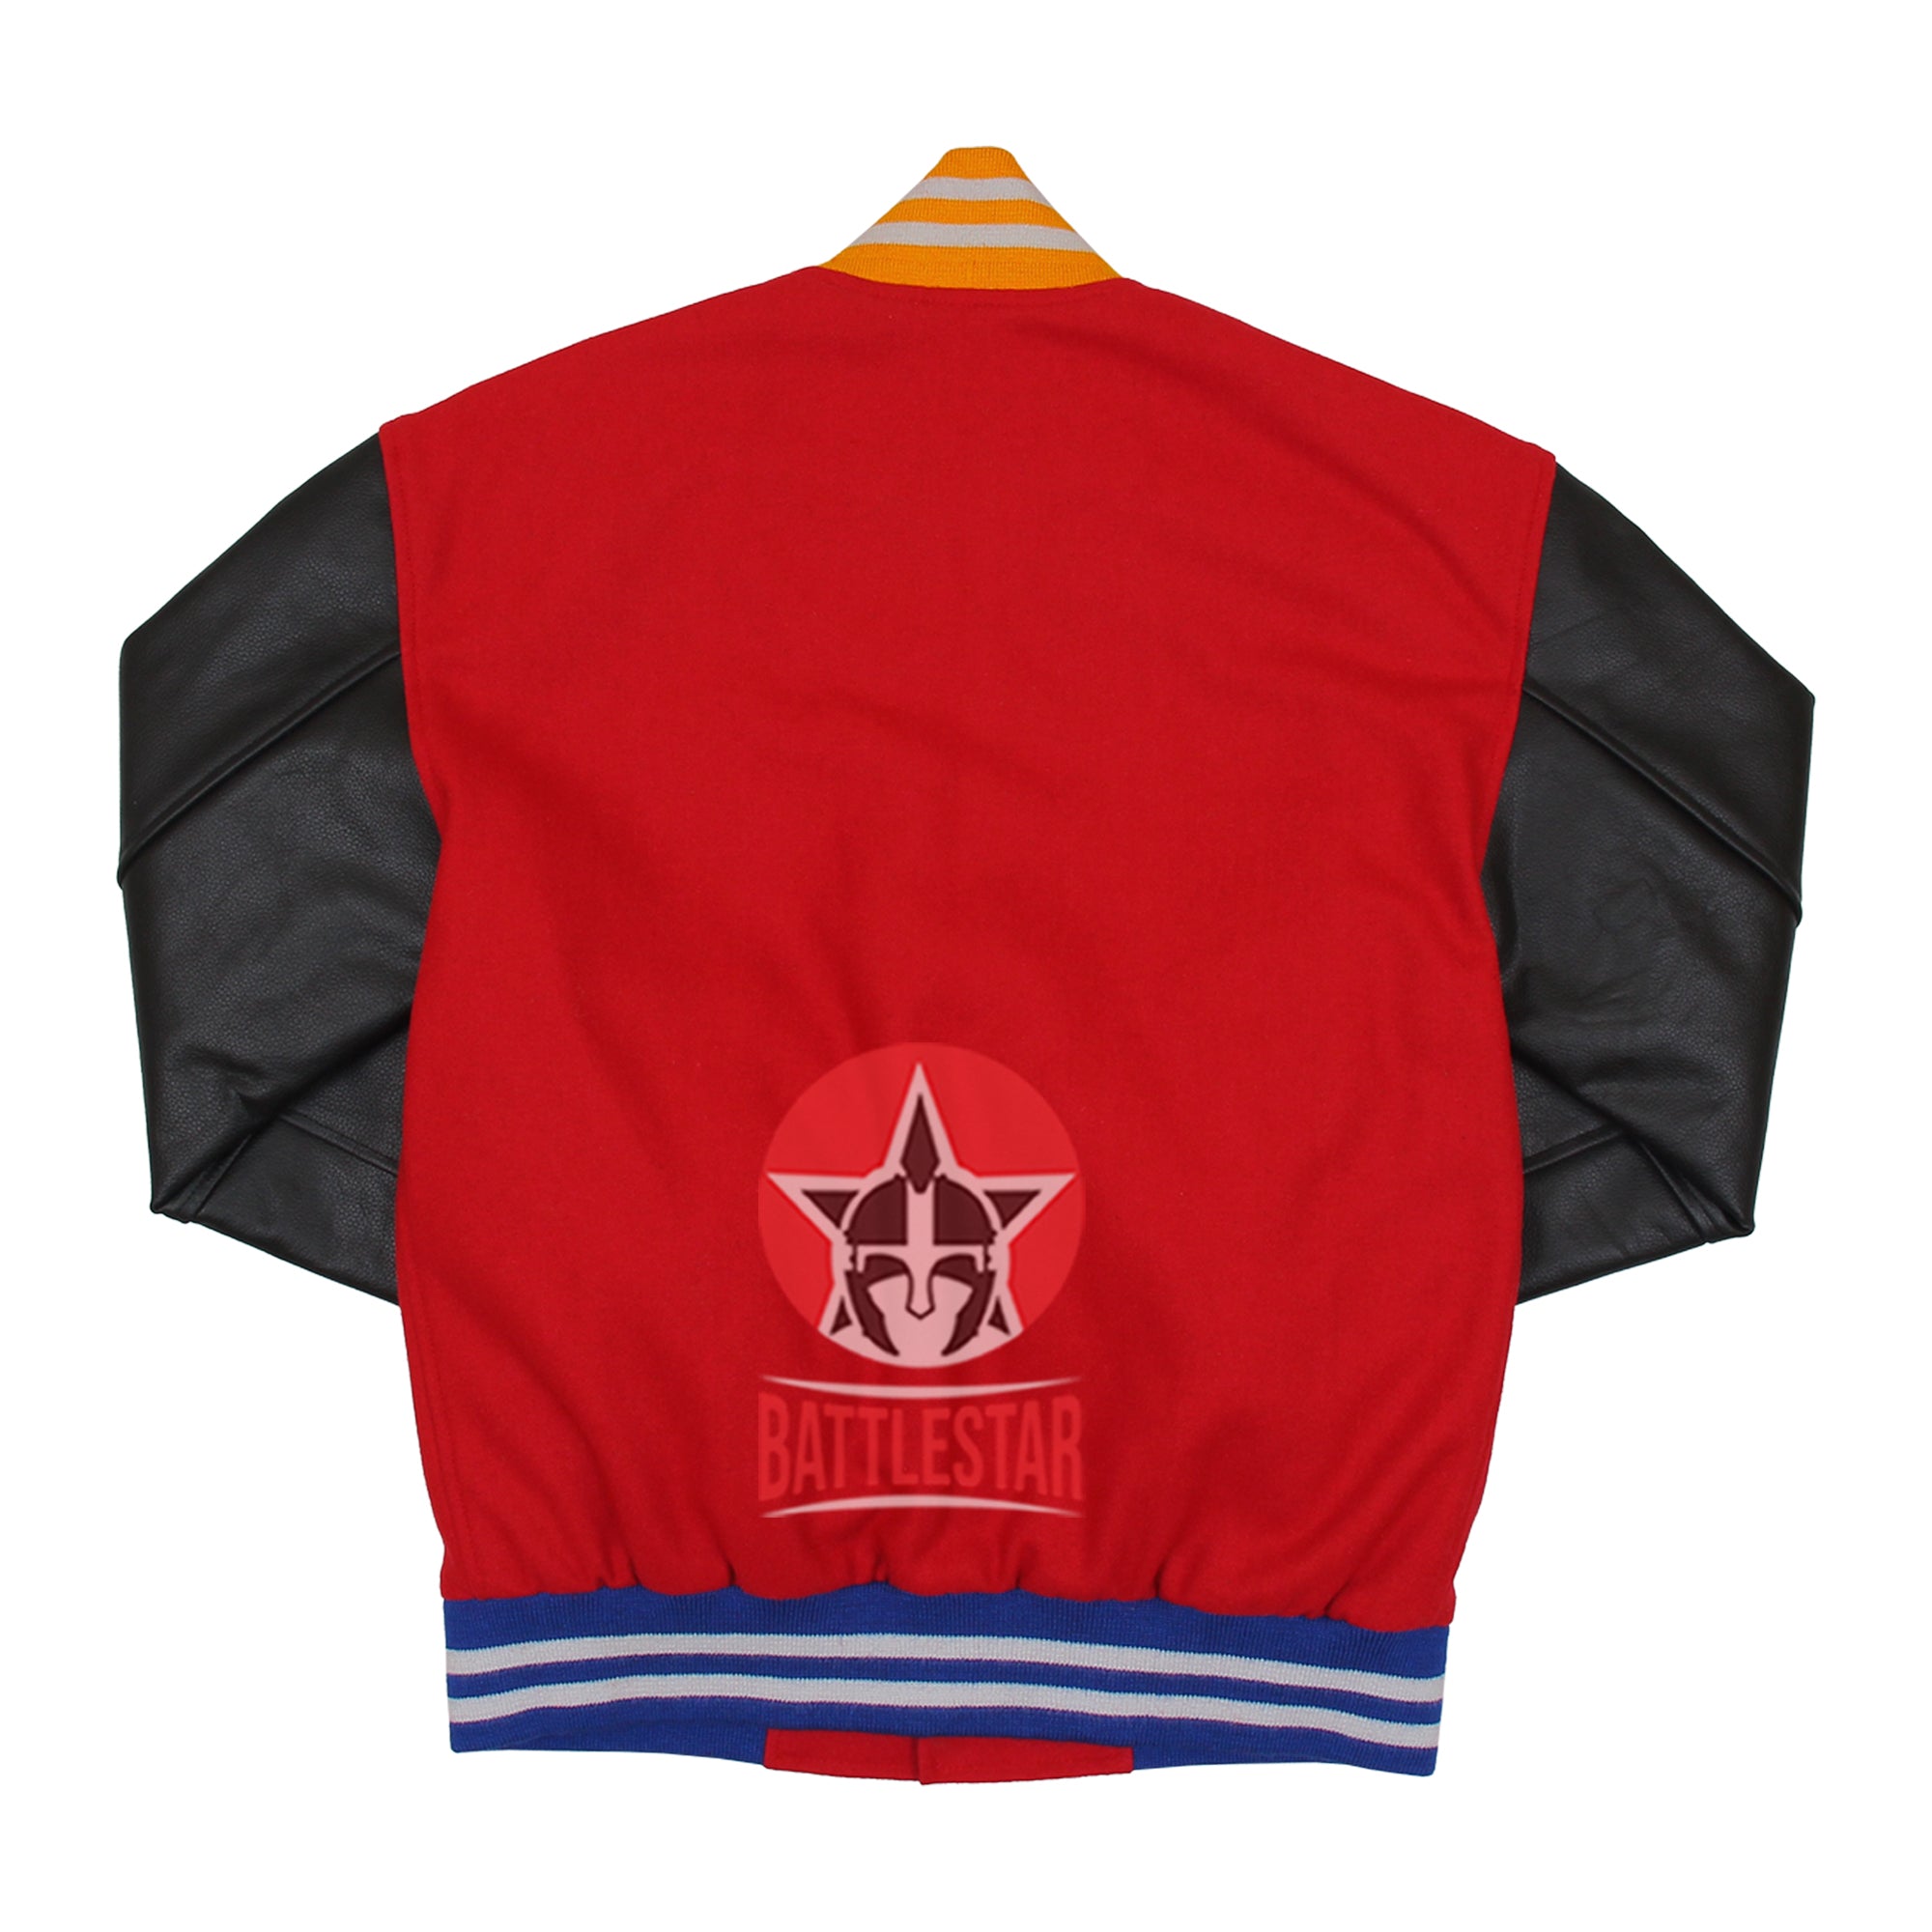 Red Wool Black Leather Varsity Baseball Jacket